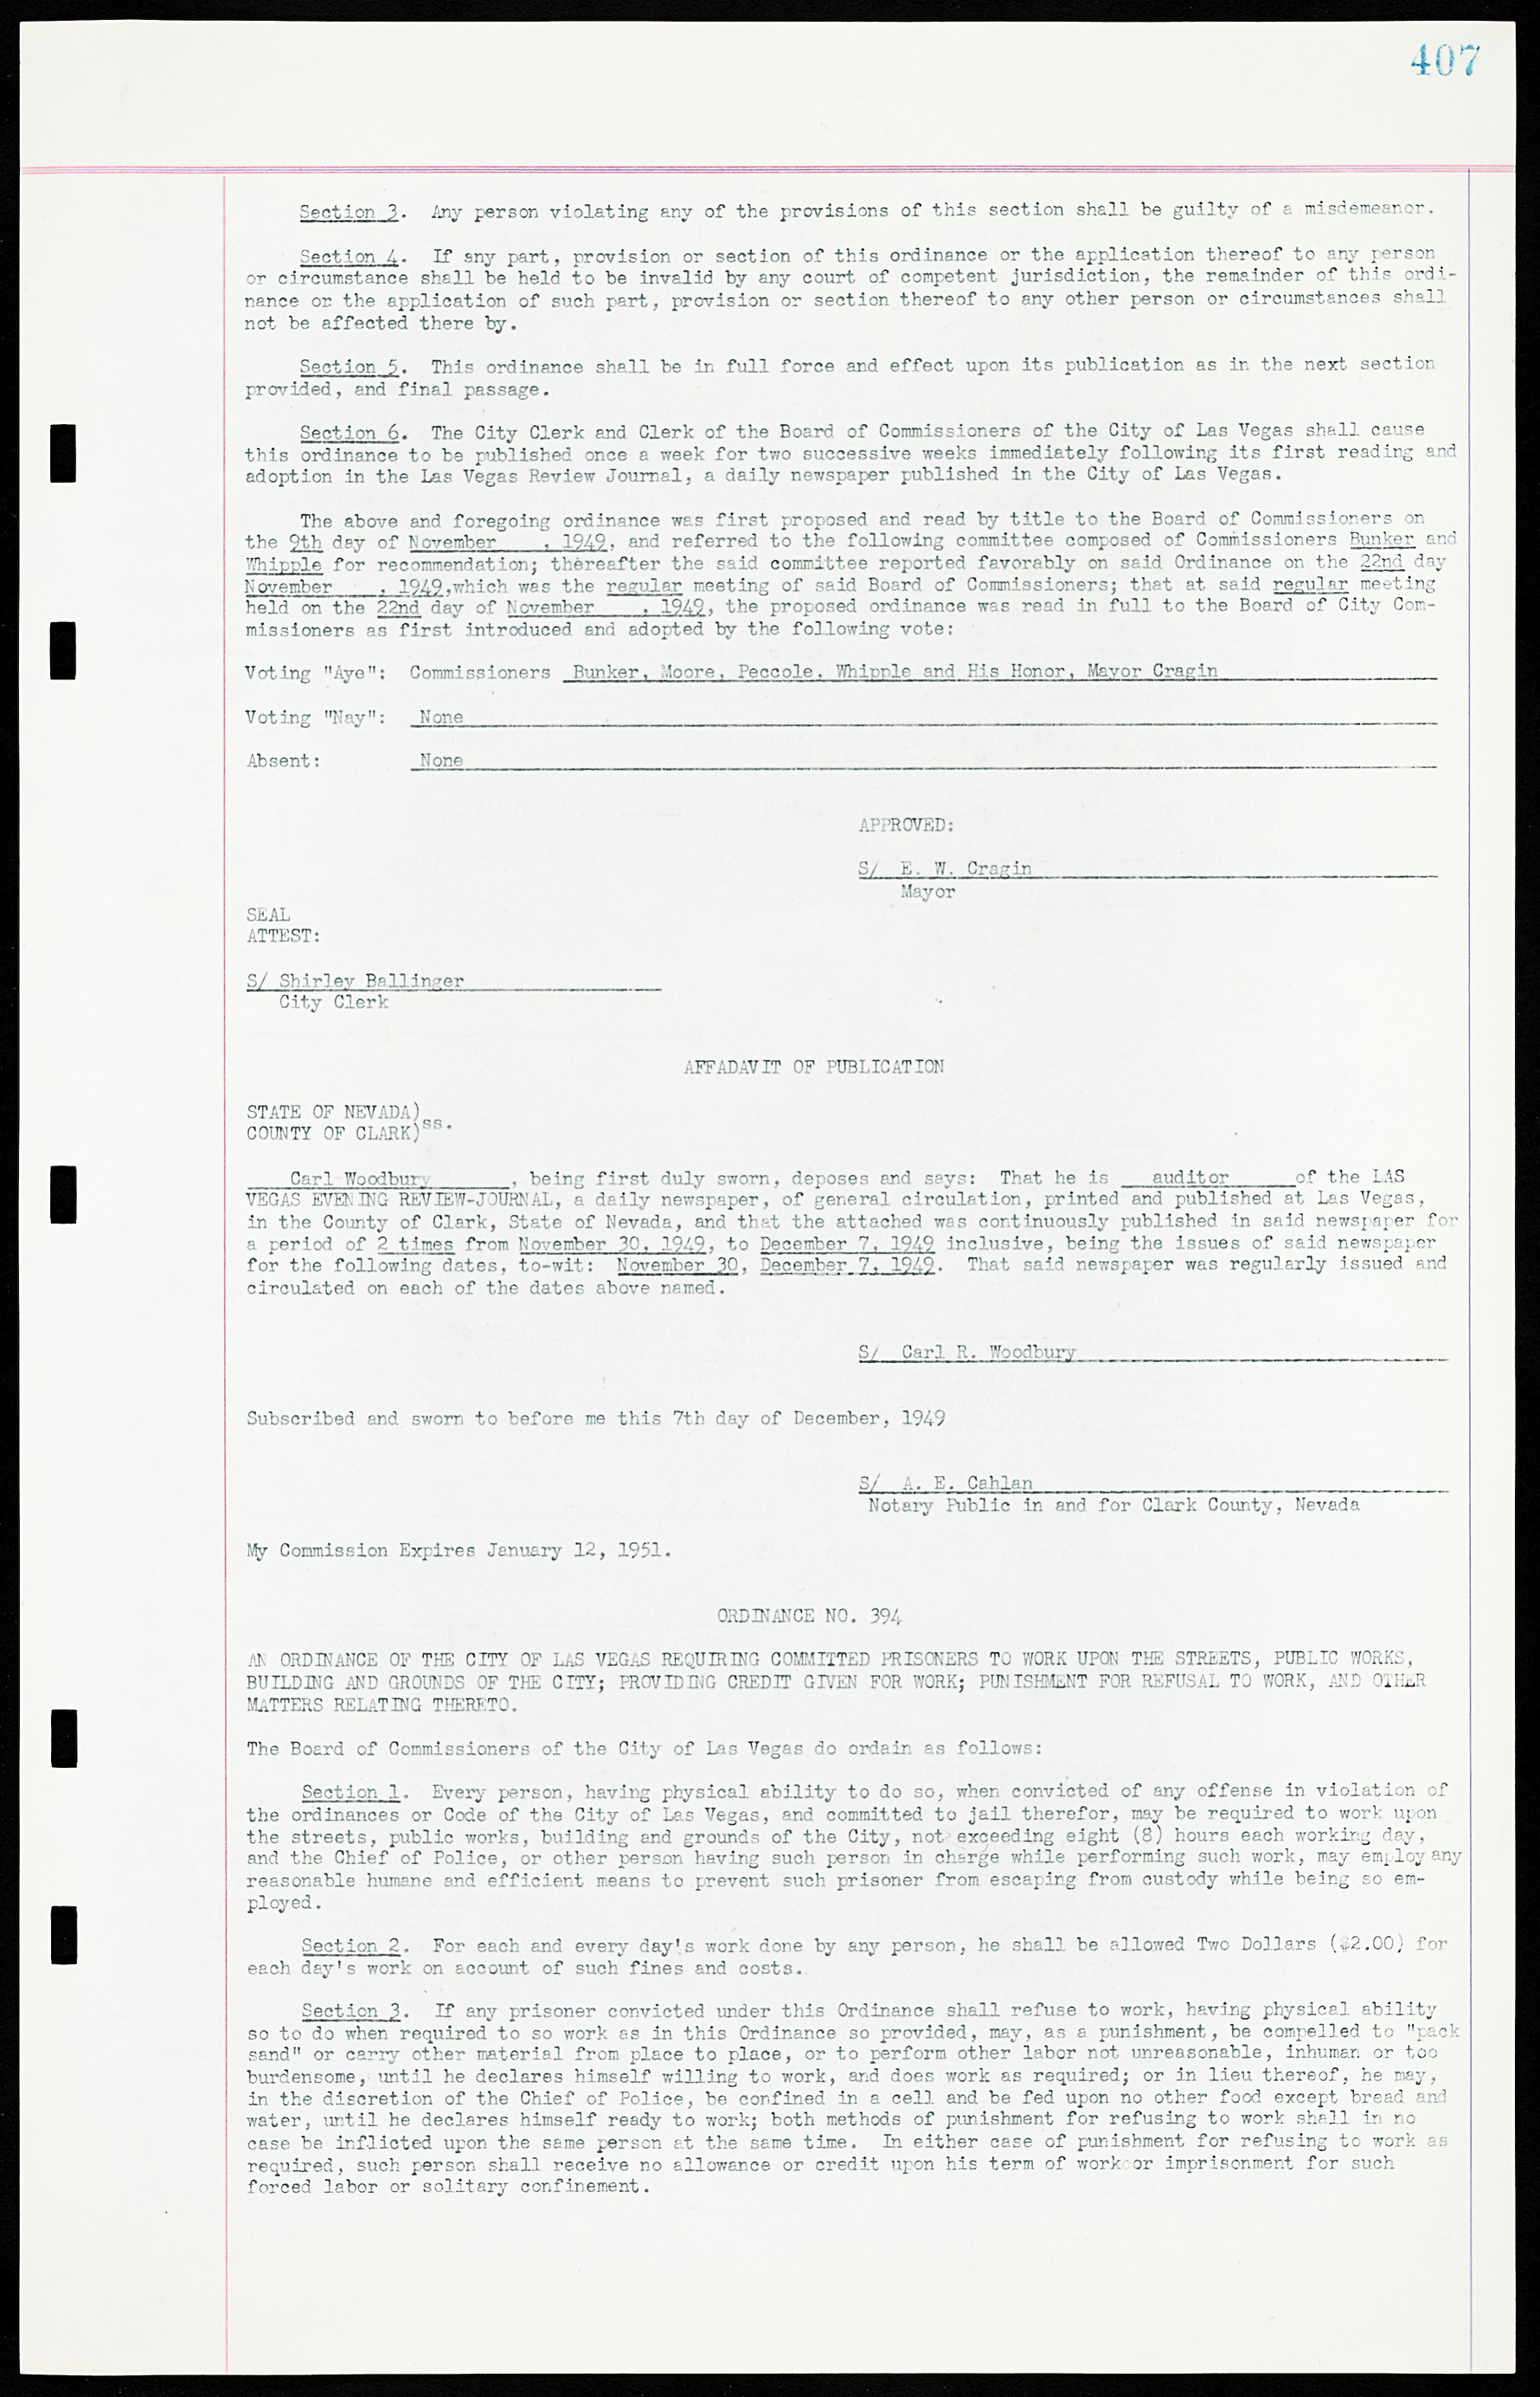 Las Vegas City Ordinances, March 31, 1933 to October 25, 1950, lvc000014-436